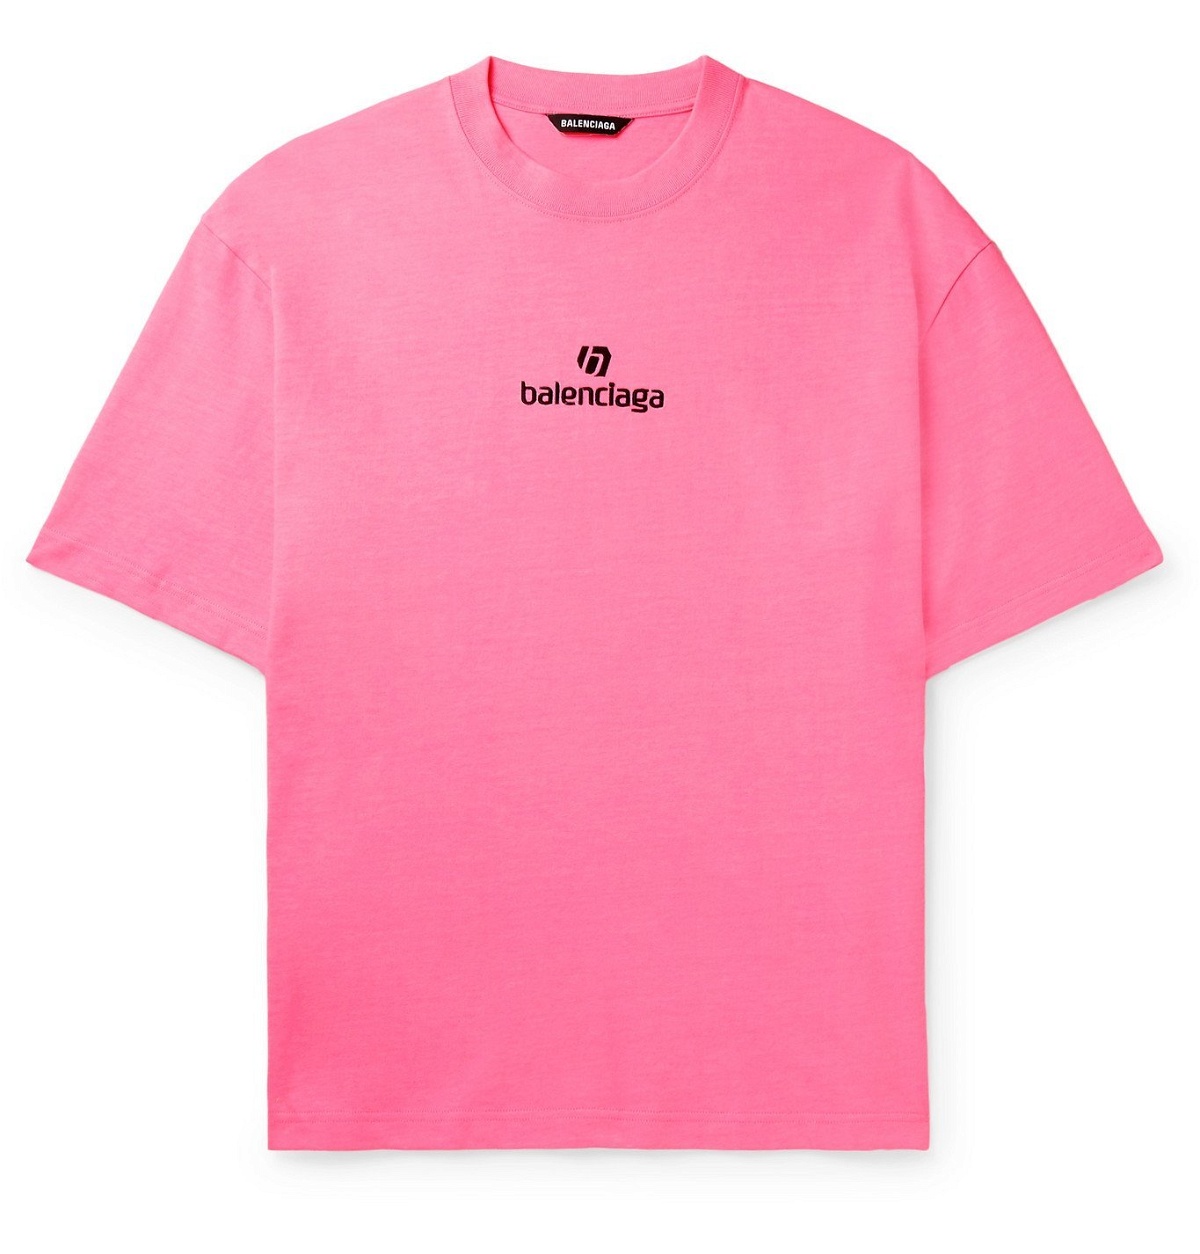 Balenciaga Pink shirt Womens Fashion Tops Shirts on Carousell